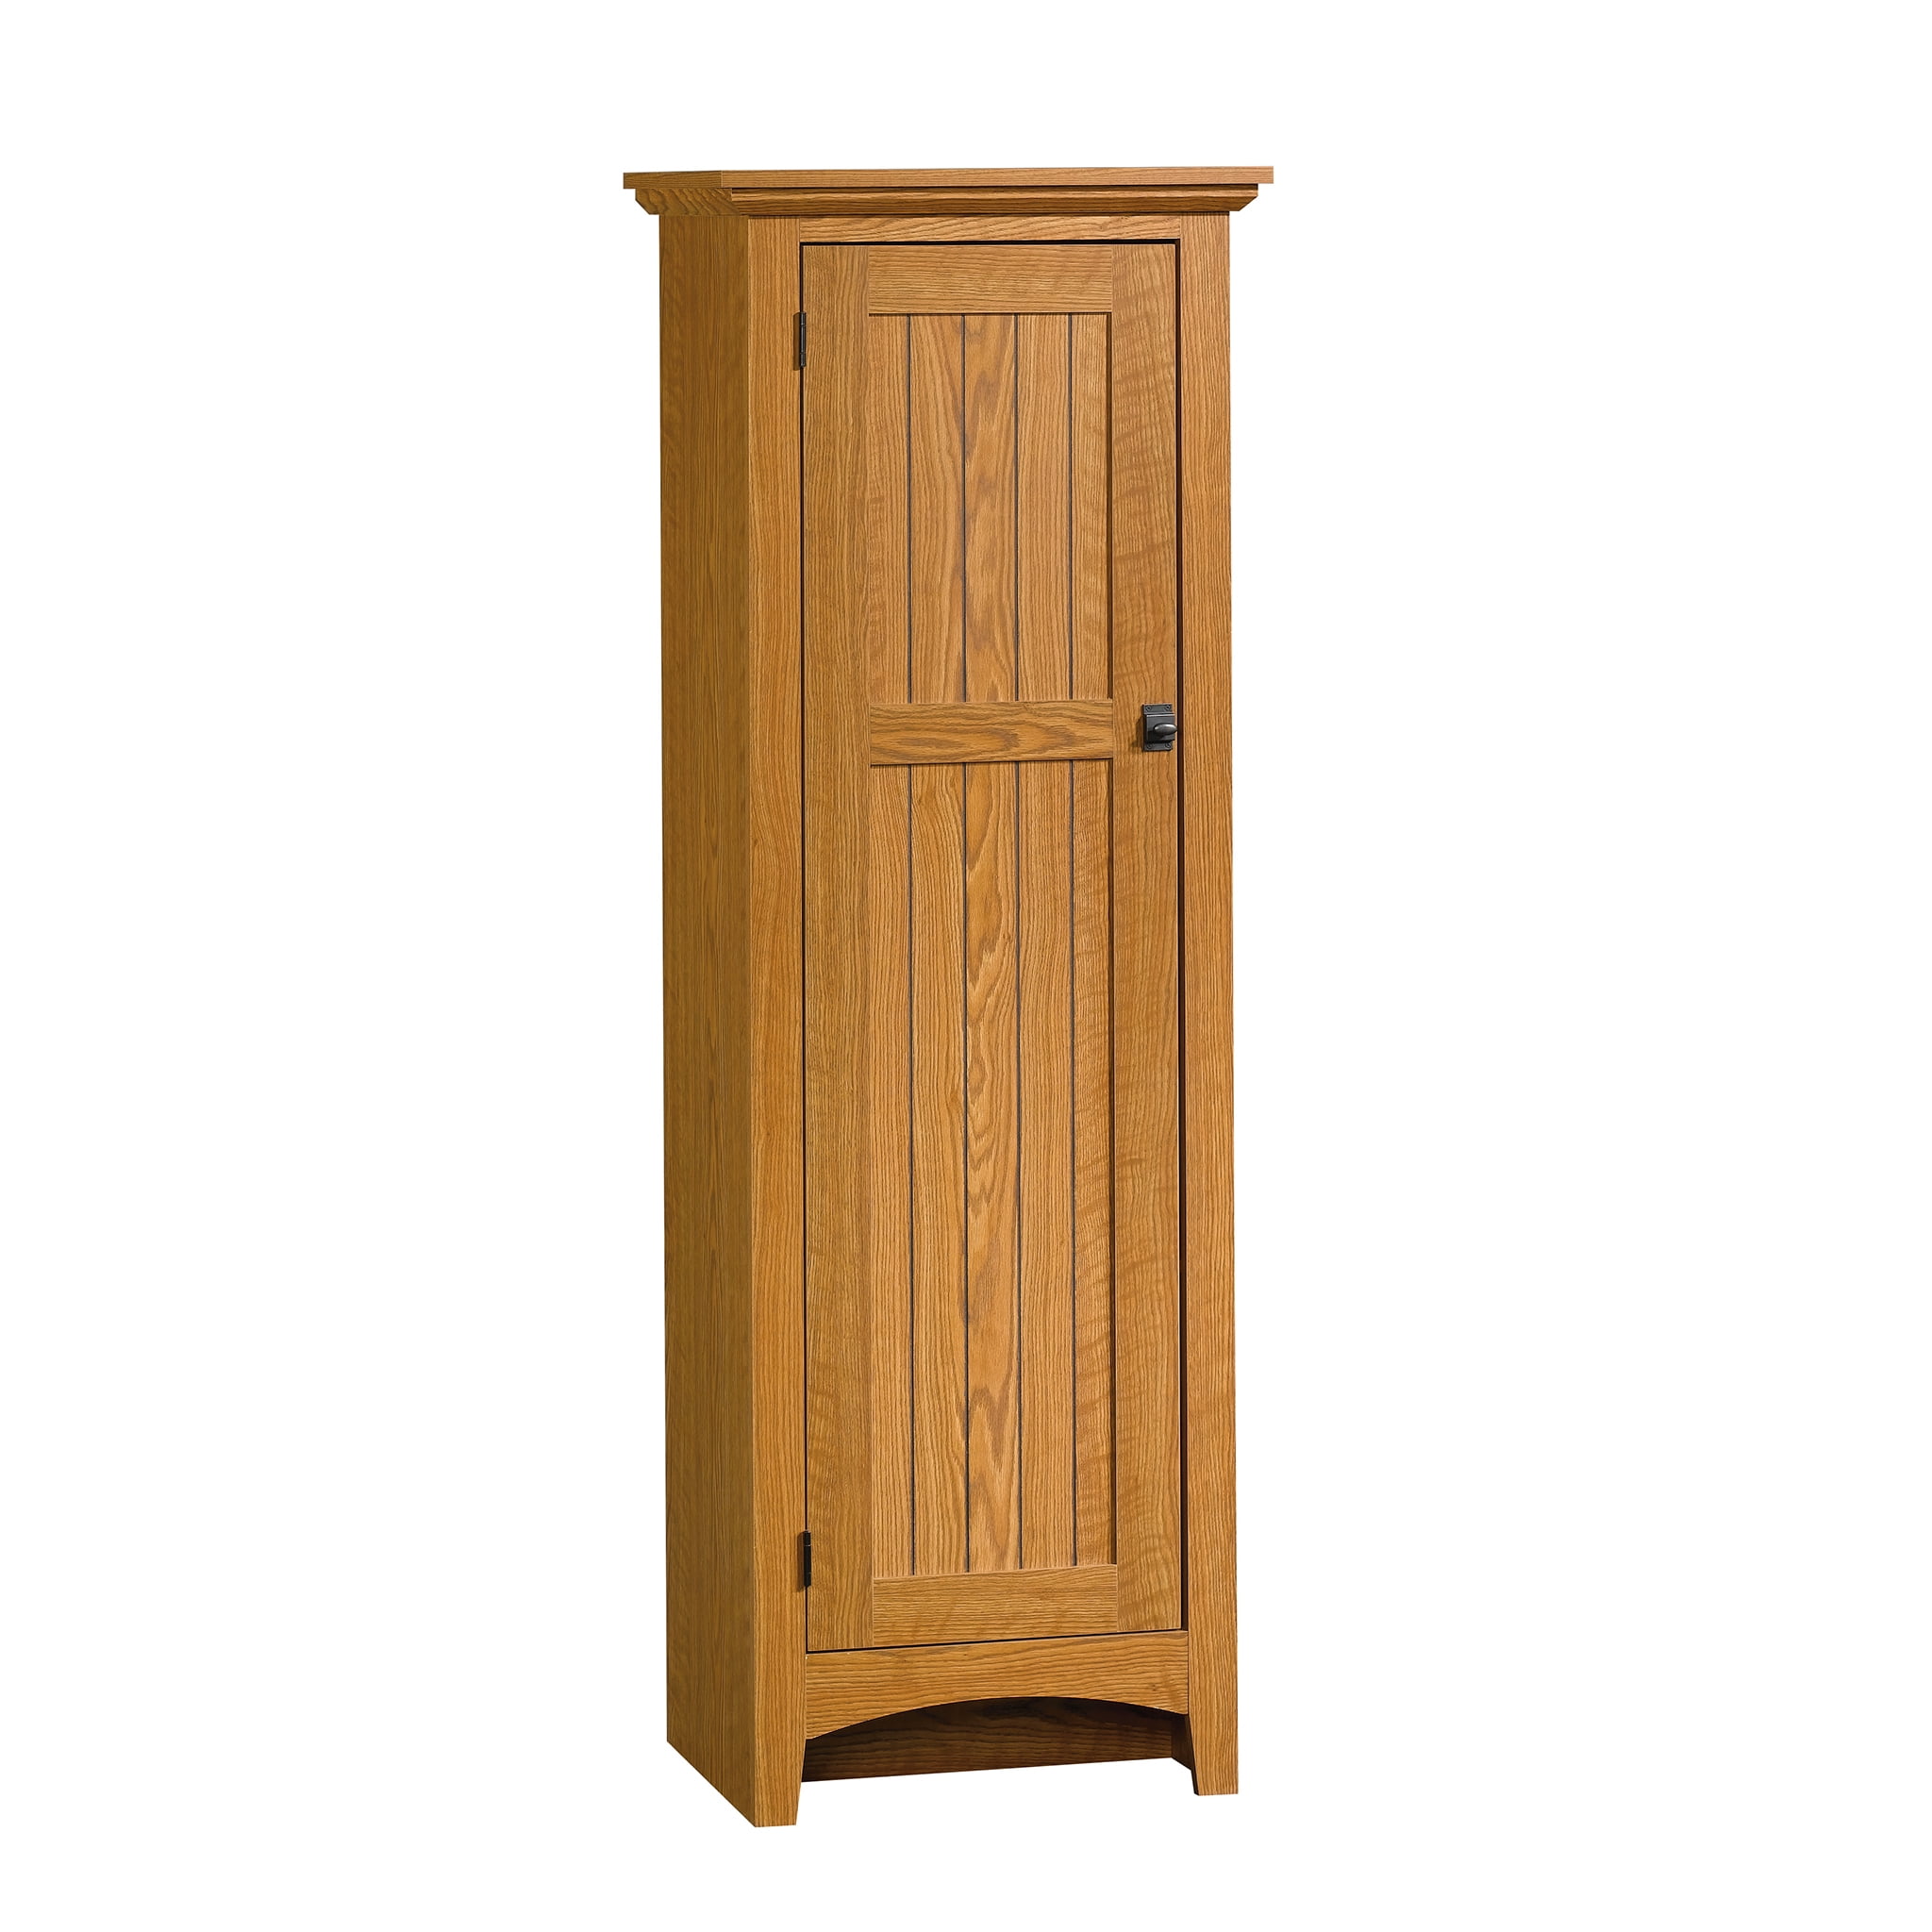 Black Kitchen Pantry Storage Cabinet Single Door Wood Organizer 5 Shelves 